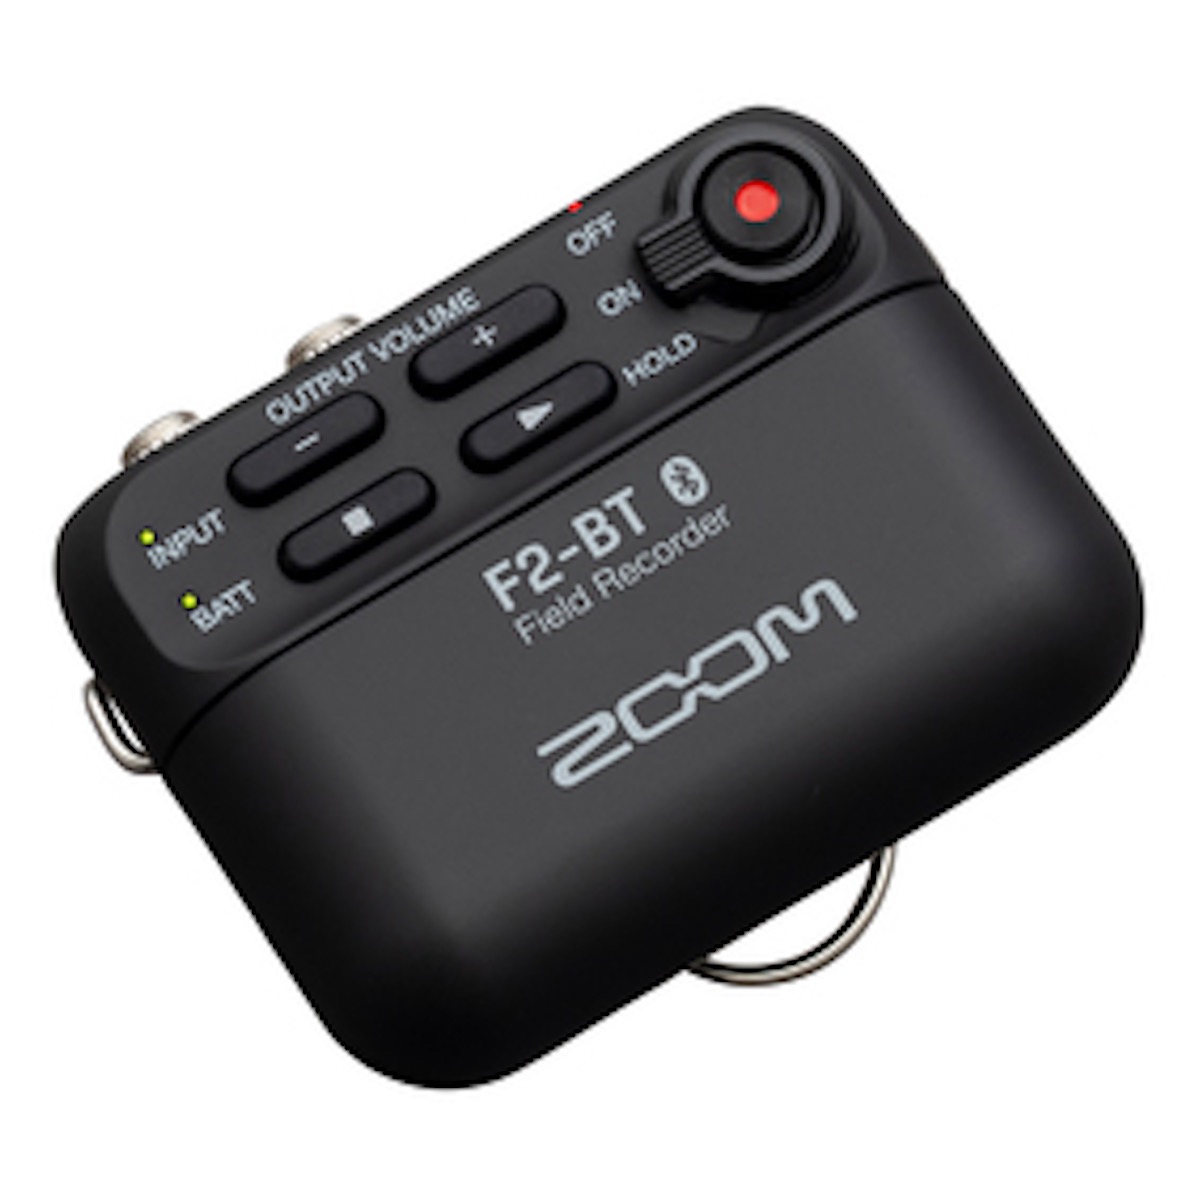 Zoom F2-BT Field Recorder und Mikrofon